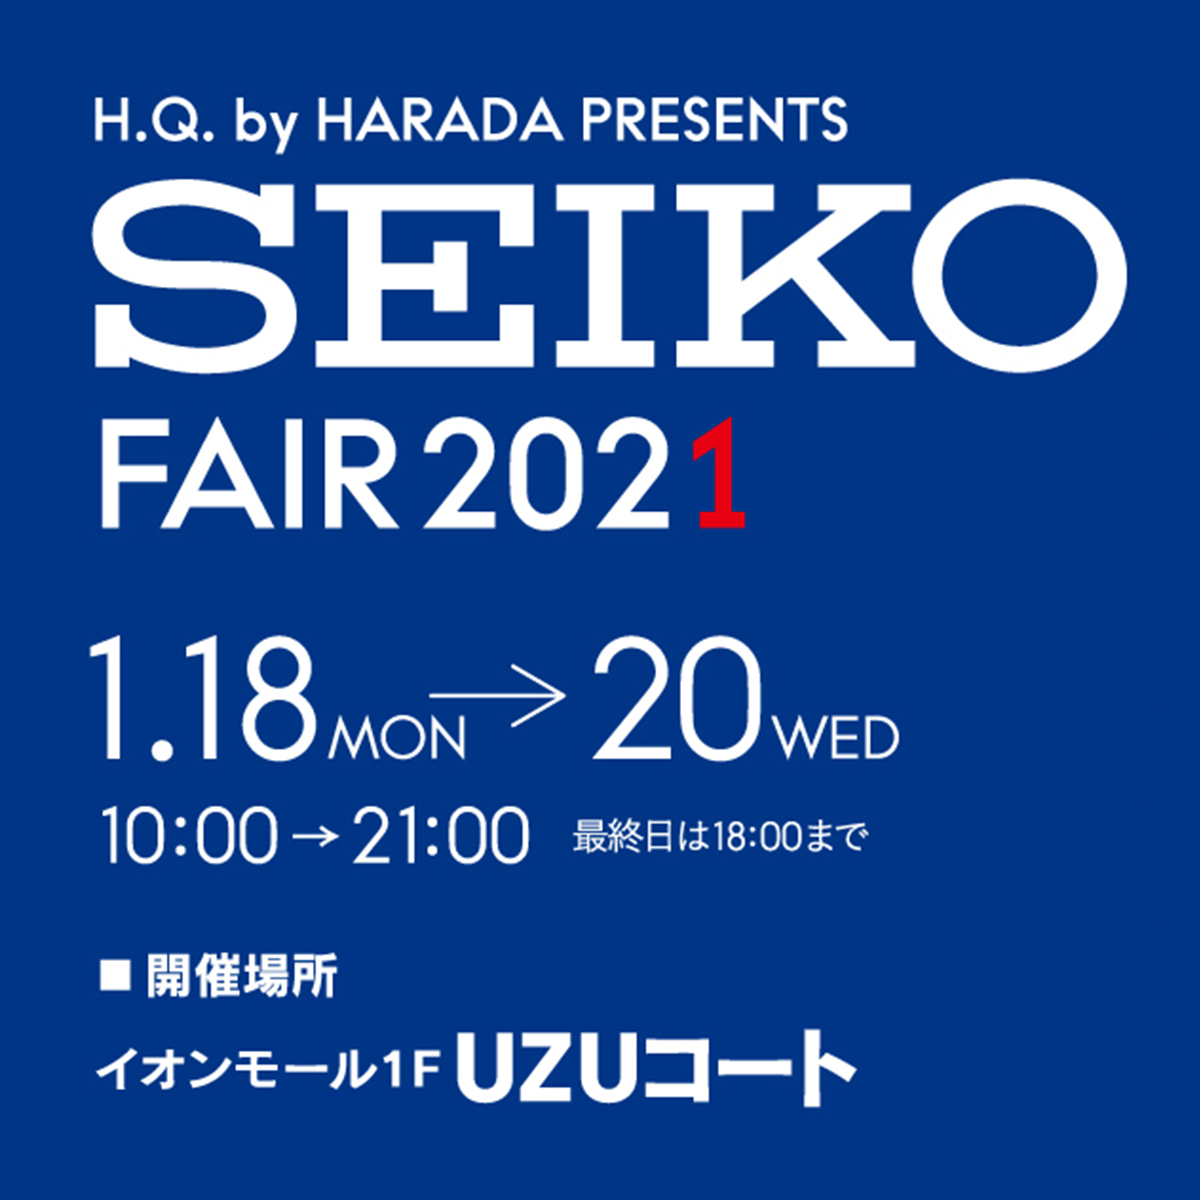 SEIKO fair 2021 | セイコーフェア in H.Q. by HARADA (イオンモール徳島1F) | 1.18 Mon. - 20 Wed.